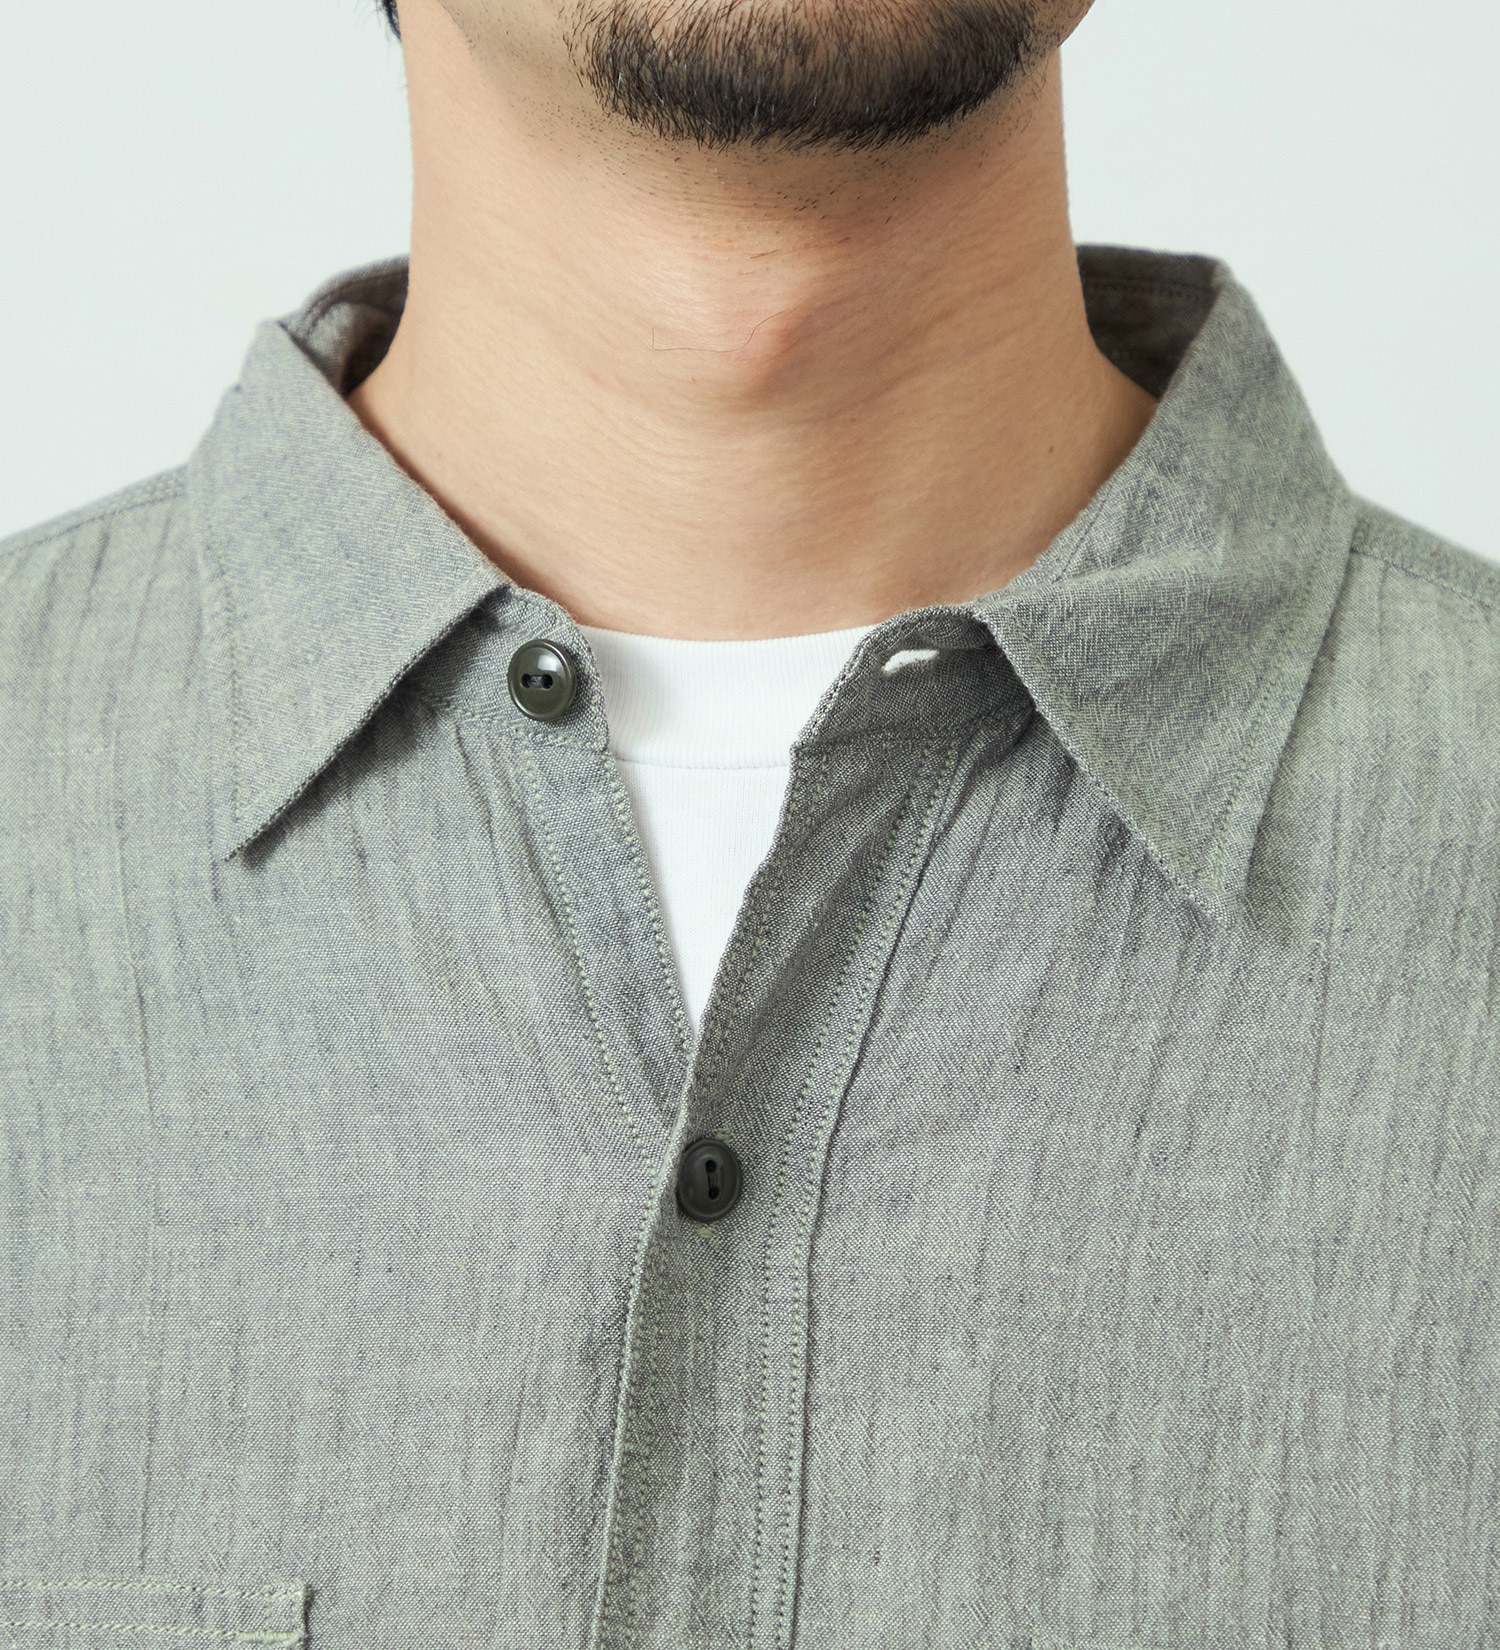 EDWIN(エドウイン)のヴィンテージワークシャツ 長袖|トップス/シャツ/ブラウス/メンズ|オリーブ